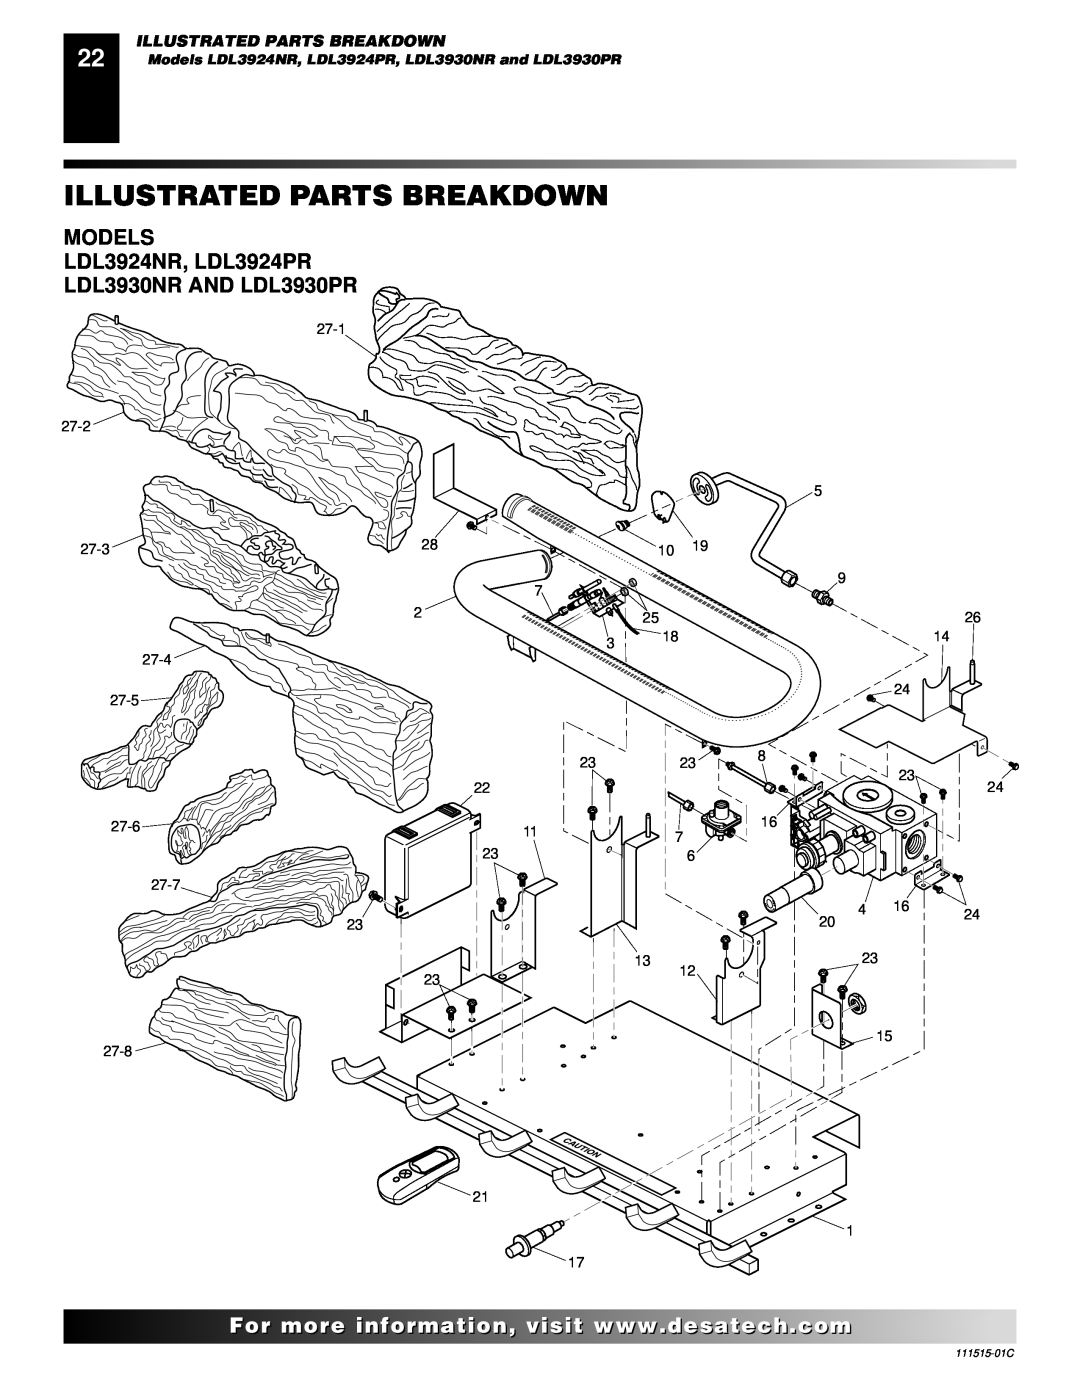 Desa installation manual Illustrated Parts Breakdown, MODELS LDL3924NR, LDL3924PR, LDL3930NR AND LDL3930PR 